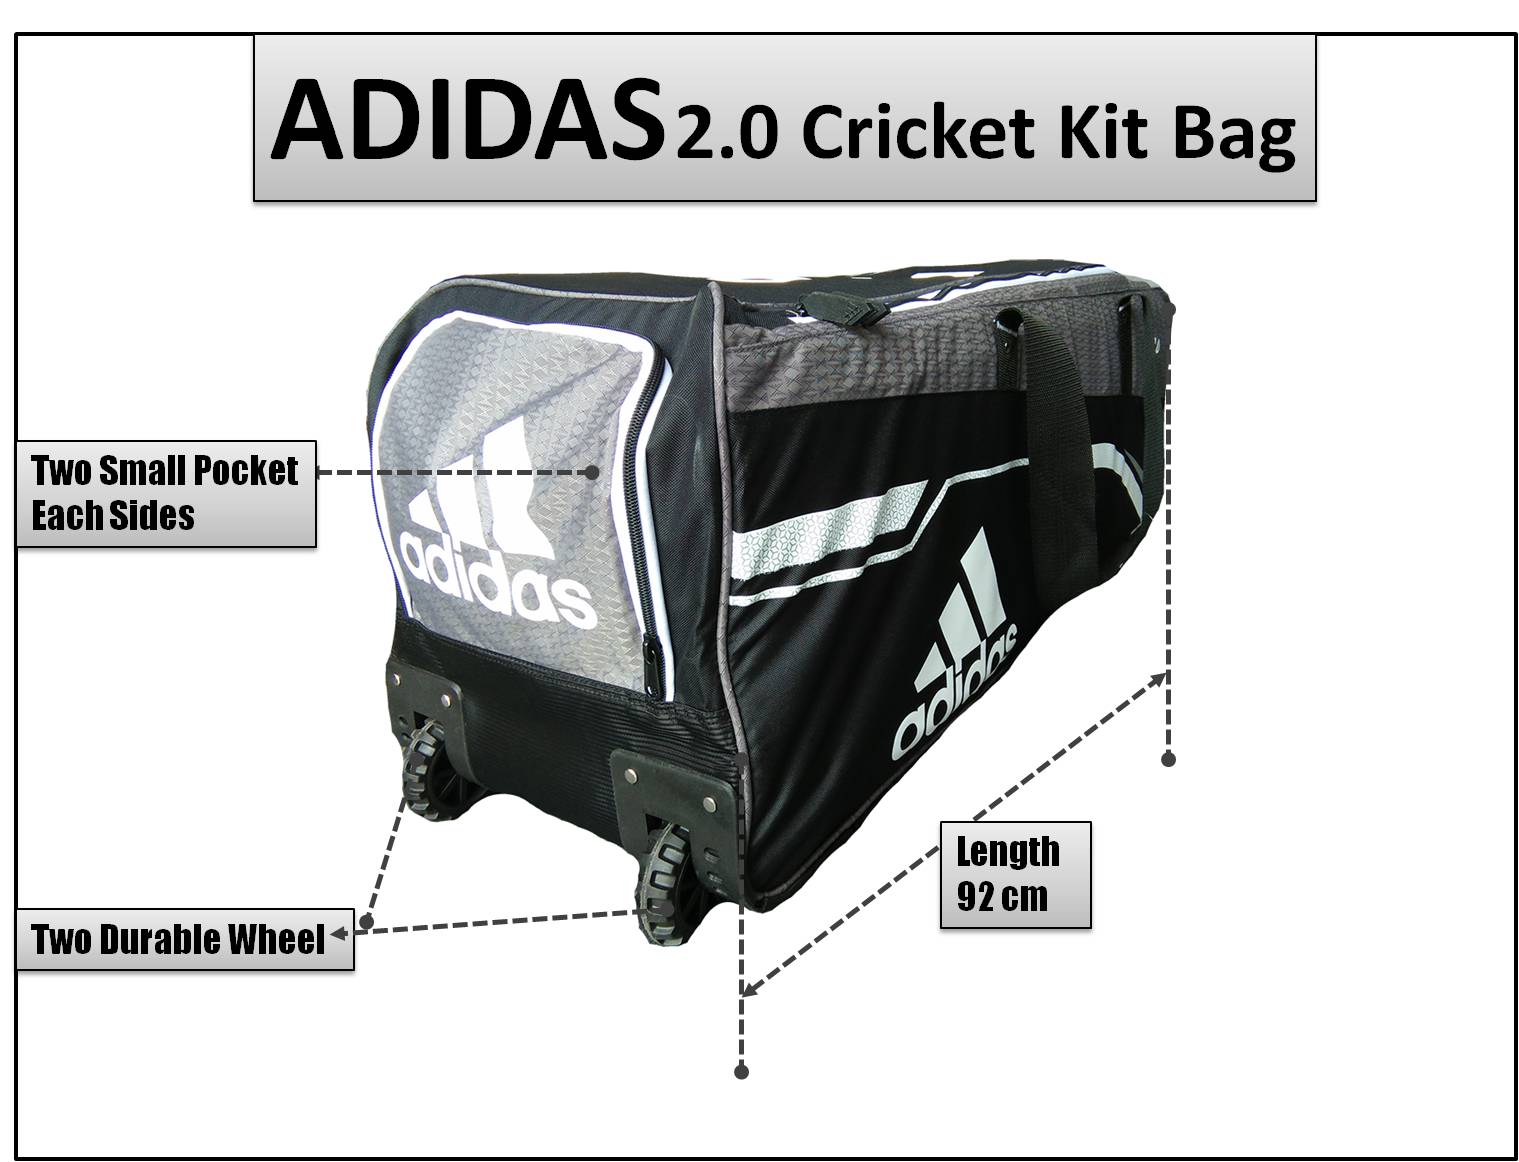 Adidas_2.0_Cricket_Kit_bag_Black_and_Gray_TECHNOLOGY_1.jpg